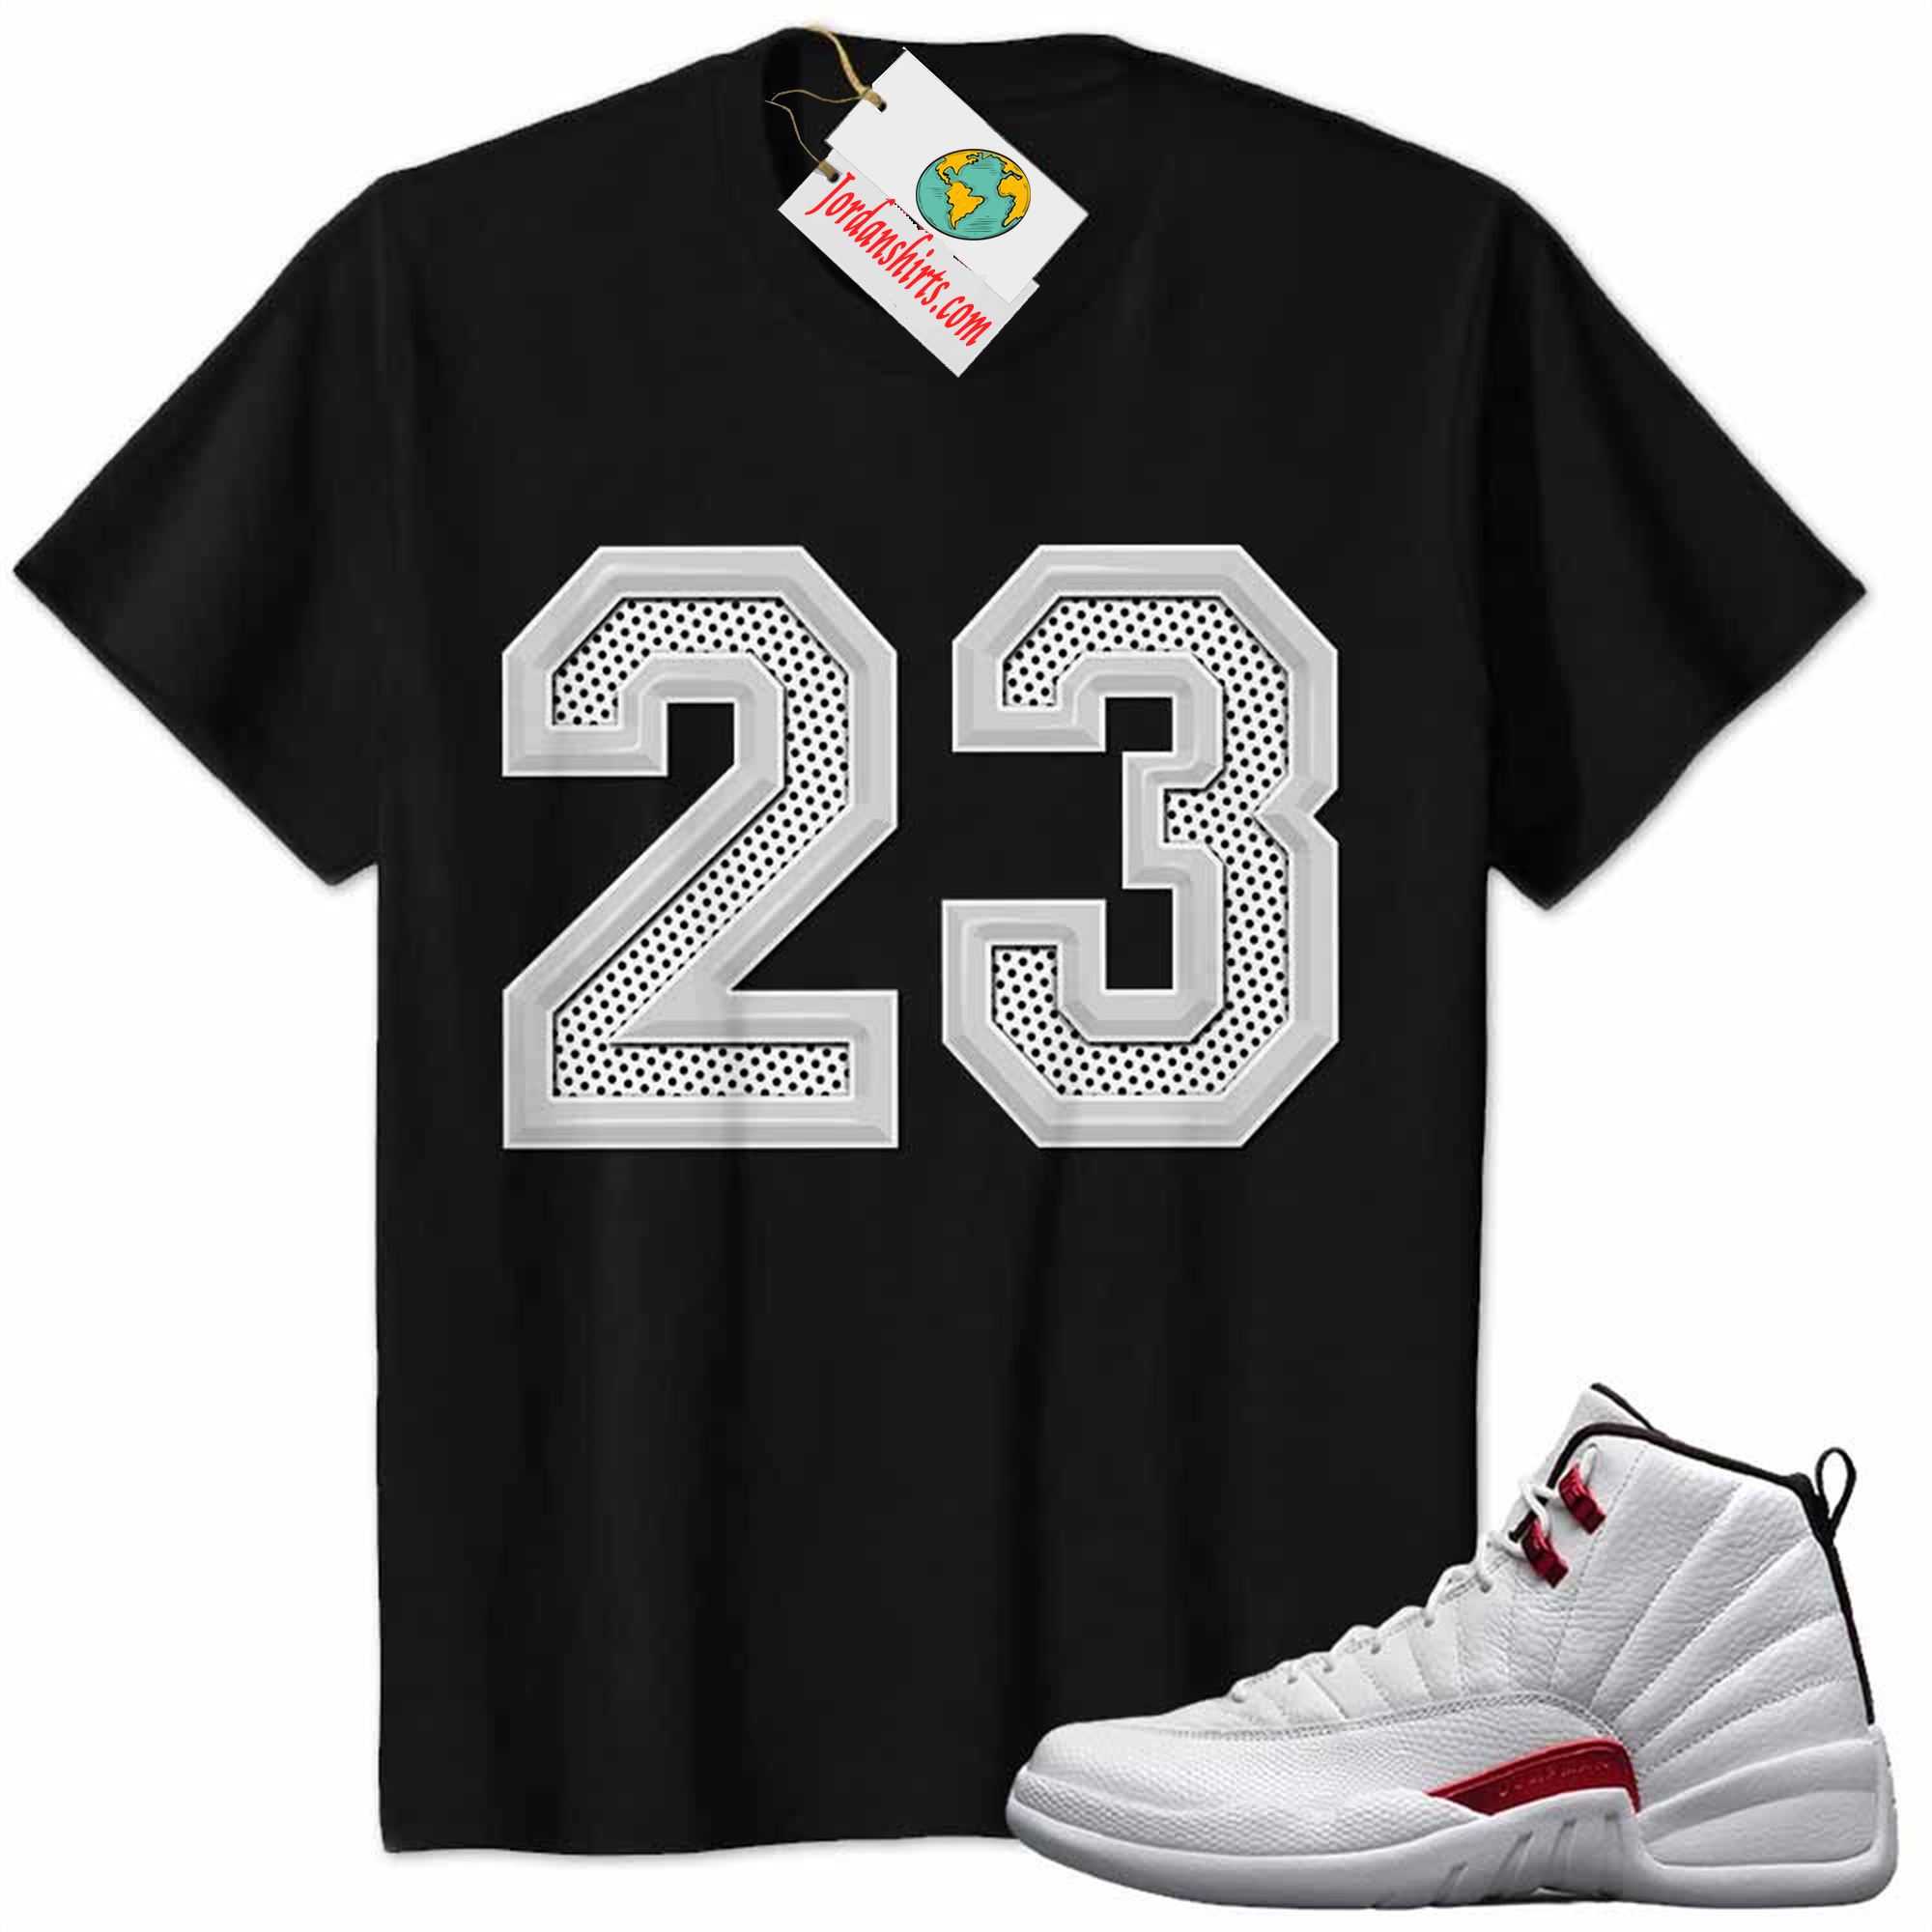 Jordan 12 Shirt, Jordan 12 Twist Shirt Michael Jordan Number 23 Black Full Size Up To 5xl